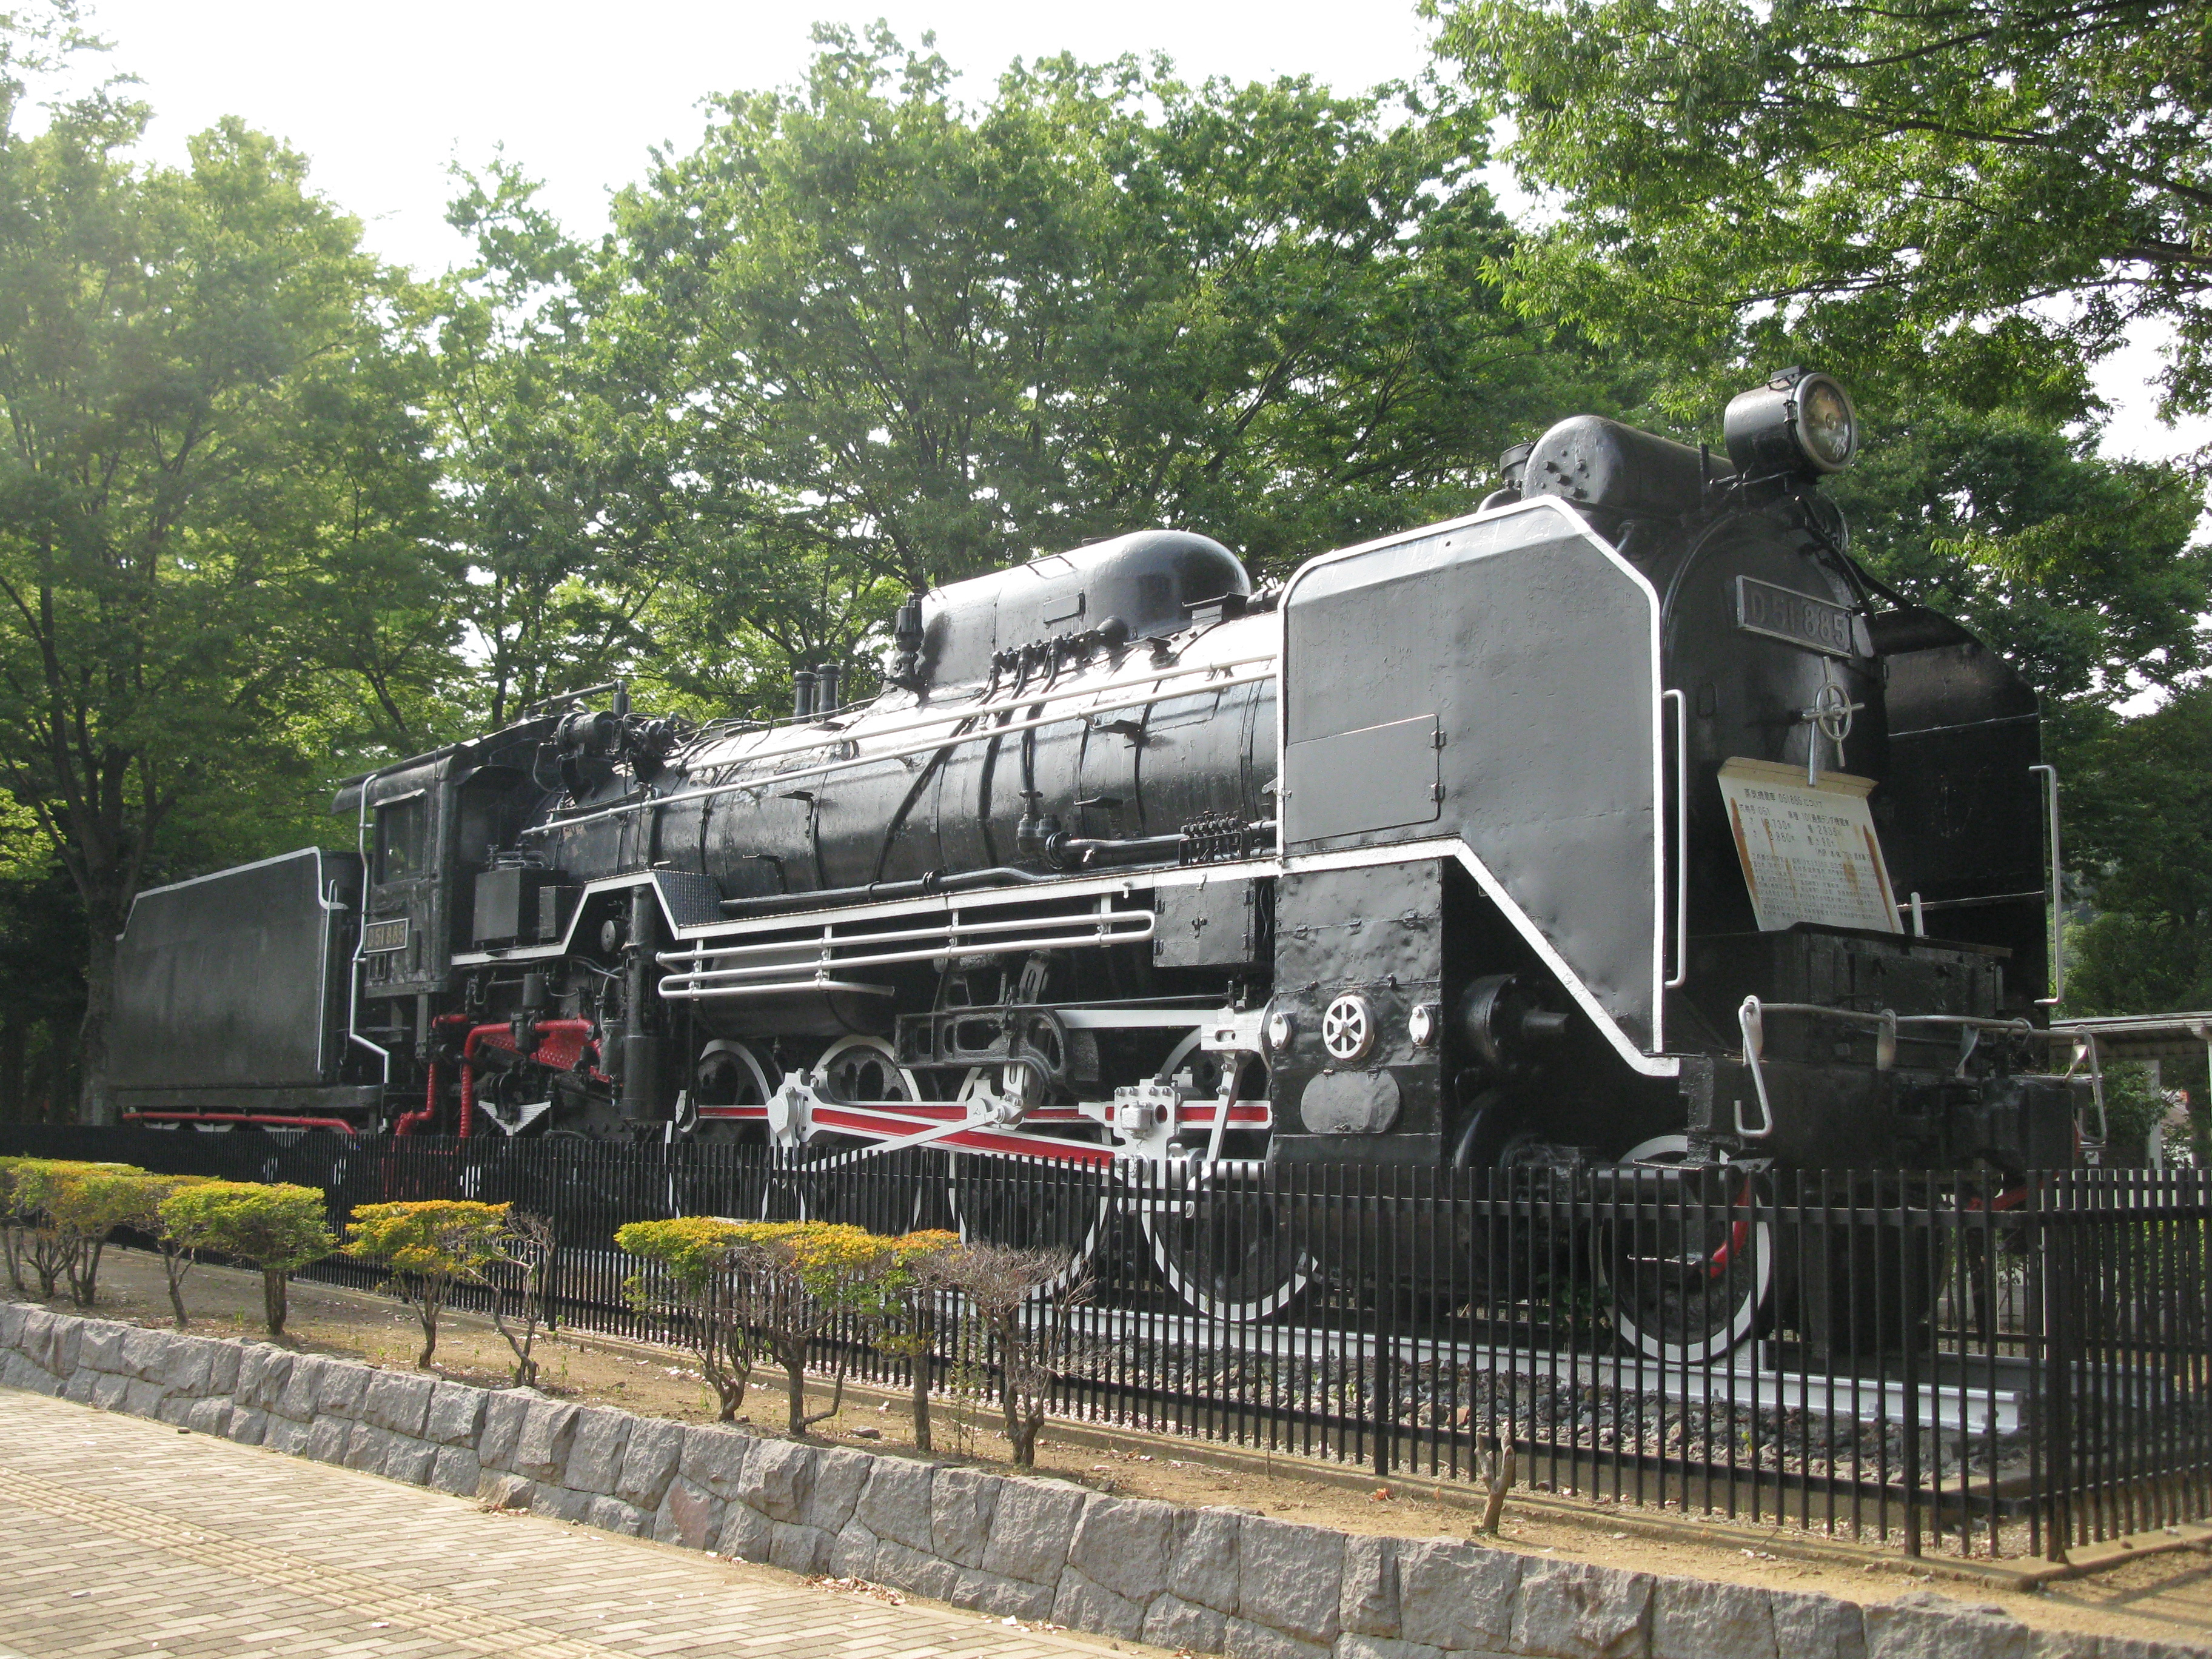 d51 steam locomotive